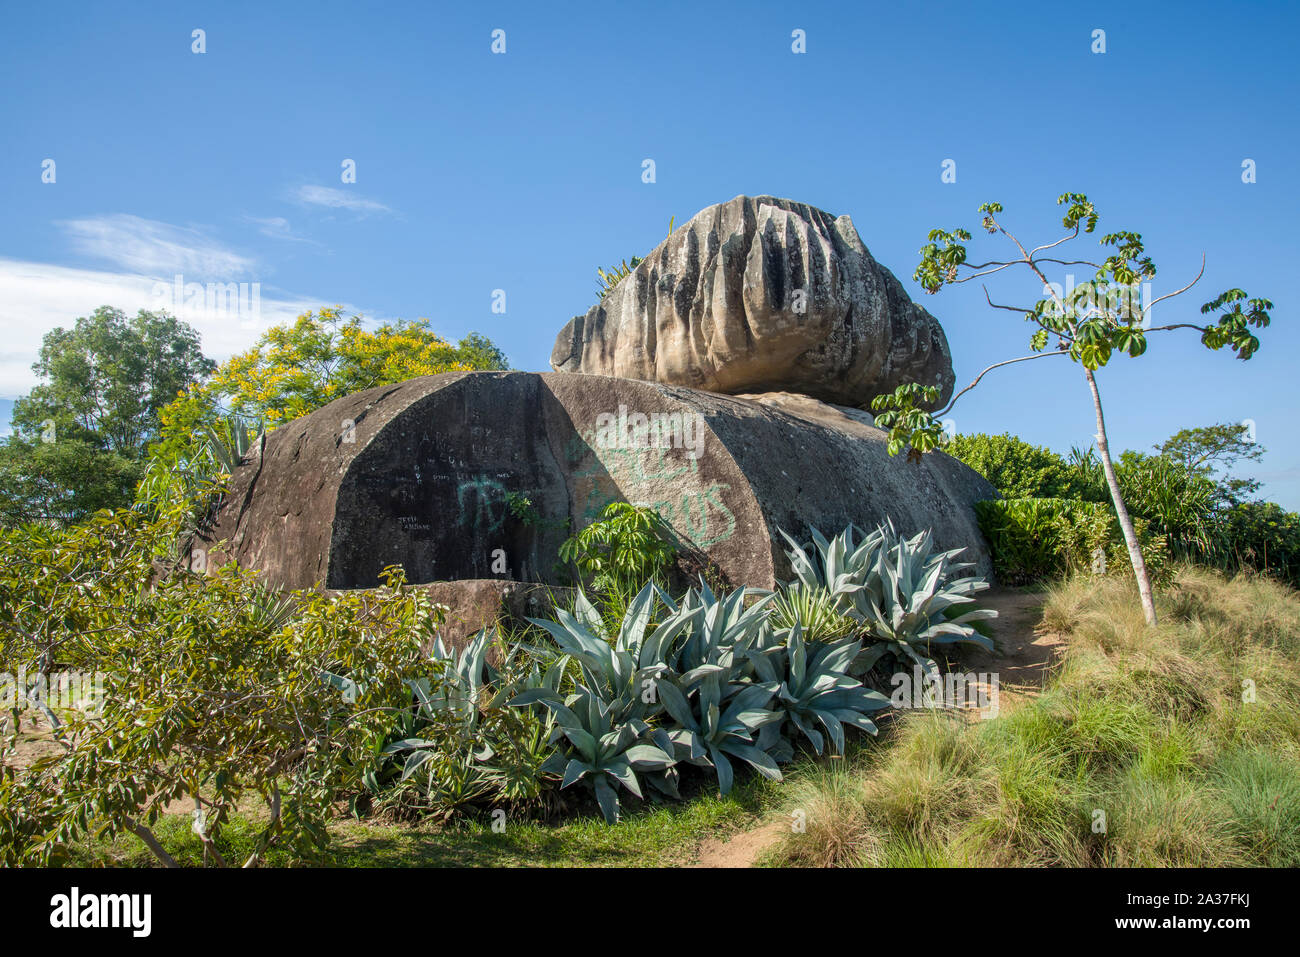 The impressive Onion Stone at the Onion Stone Park in Vitória downtown, Espirito Santo State, Brazil Stock Photo